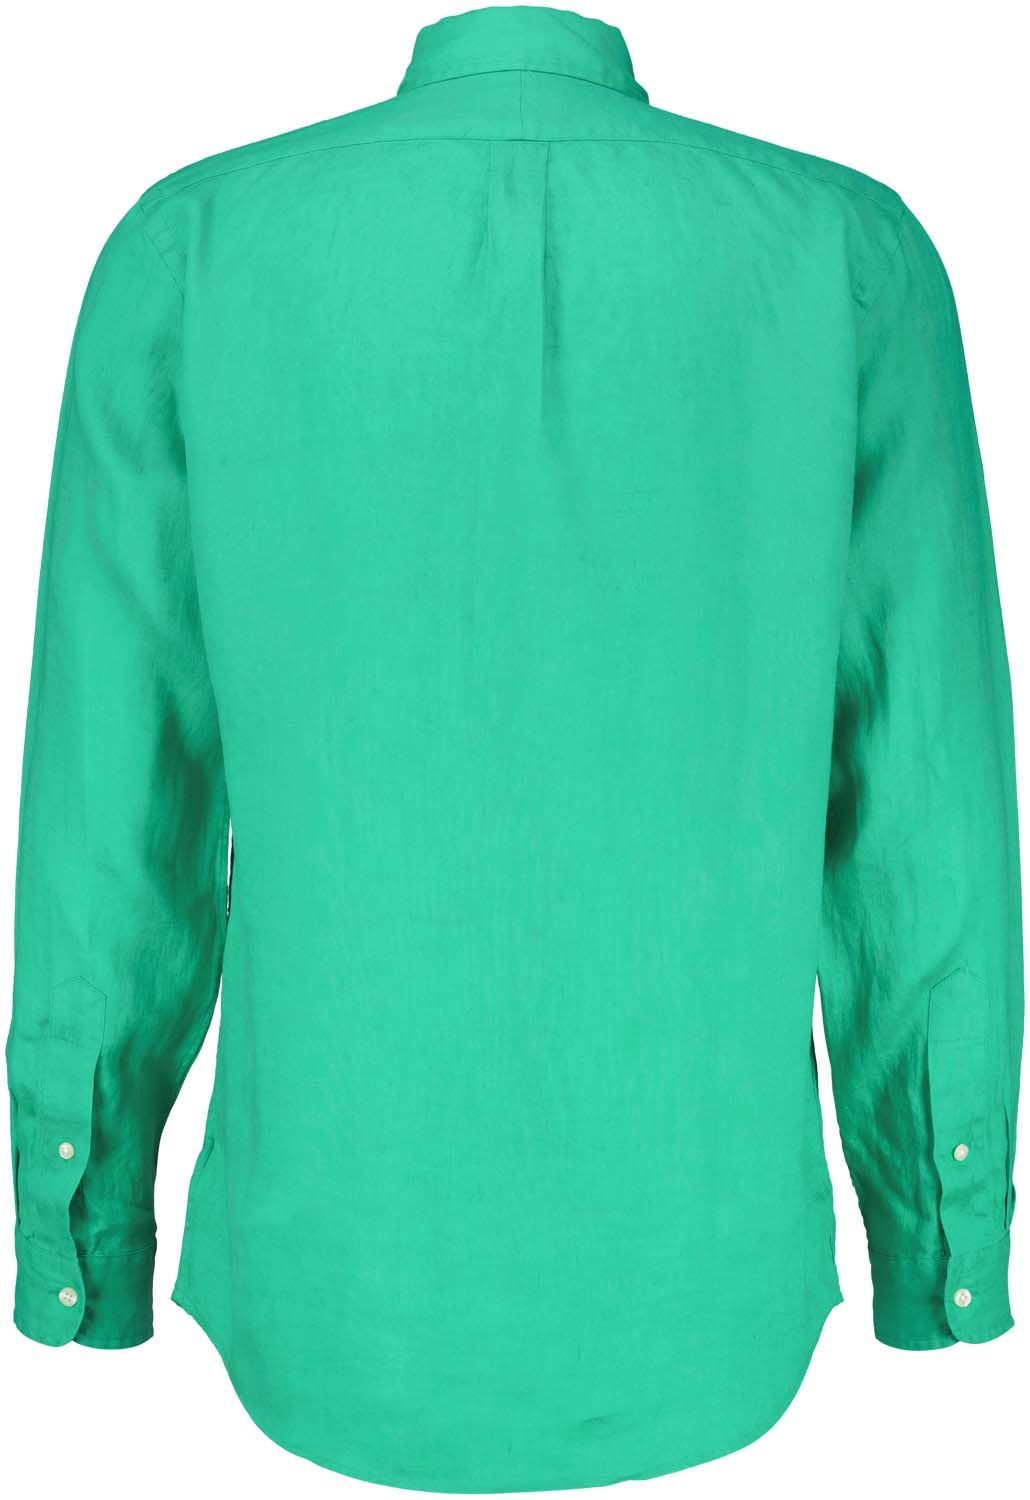 Polo Ralph Lauren Overhemd Groen